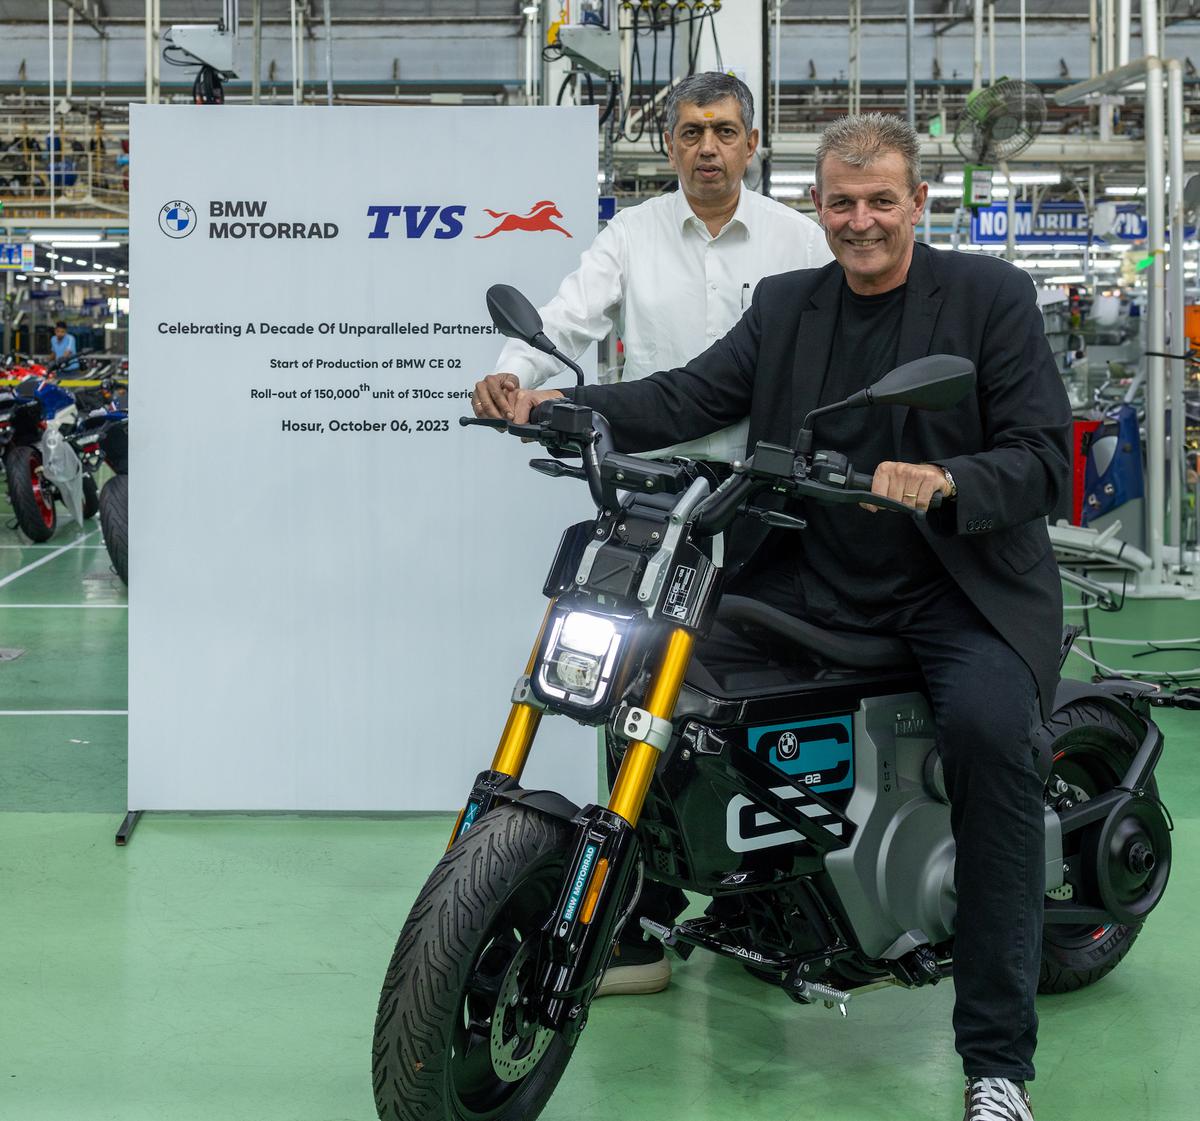 TVS, BMW start production of e-2wheeler - The Hindu